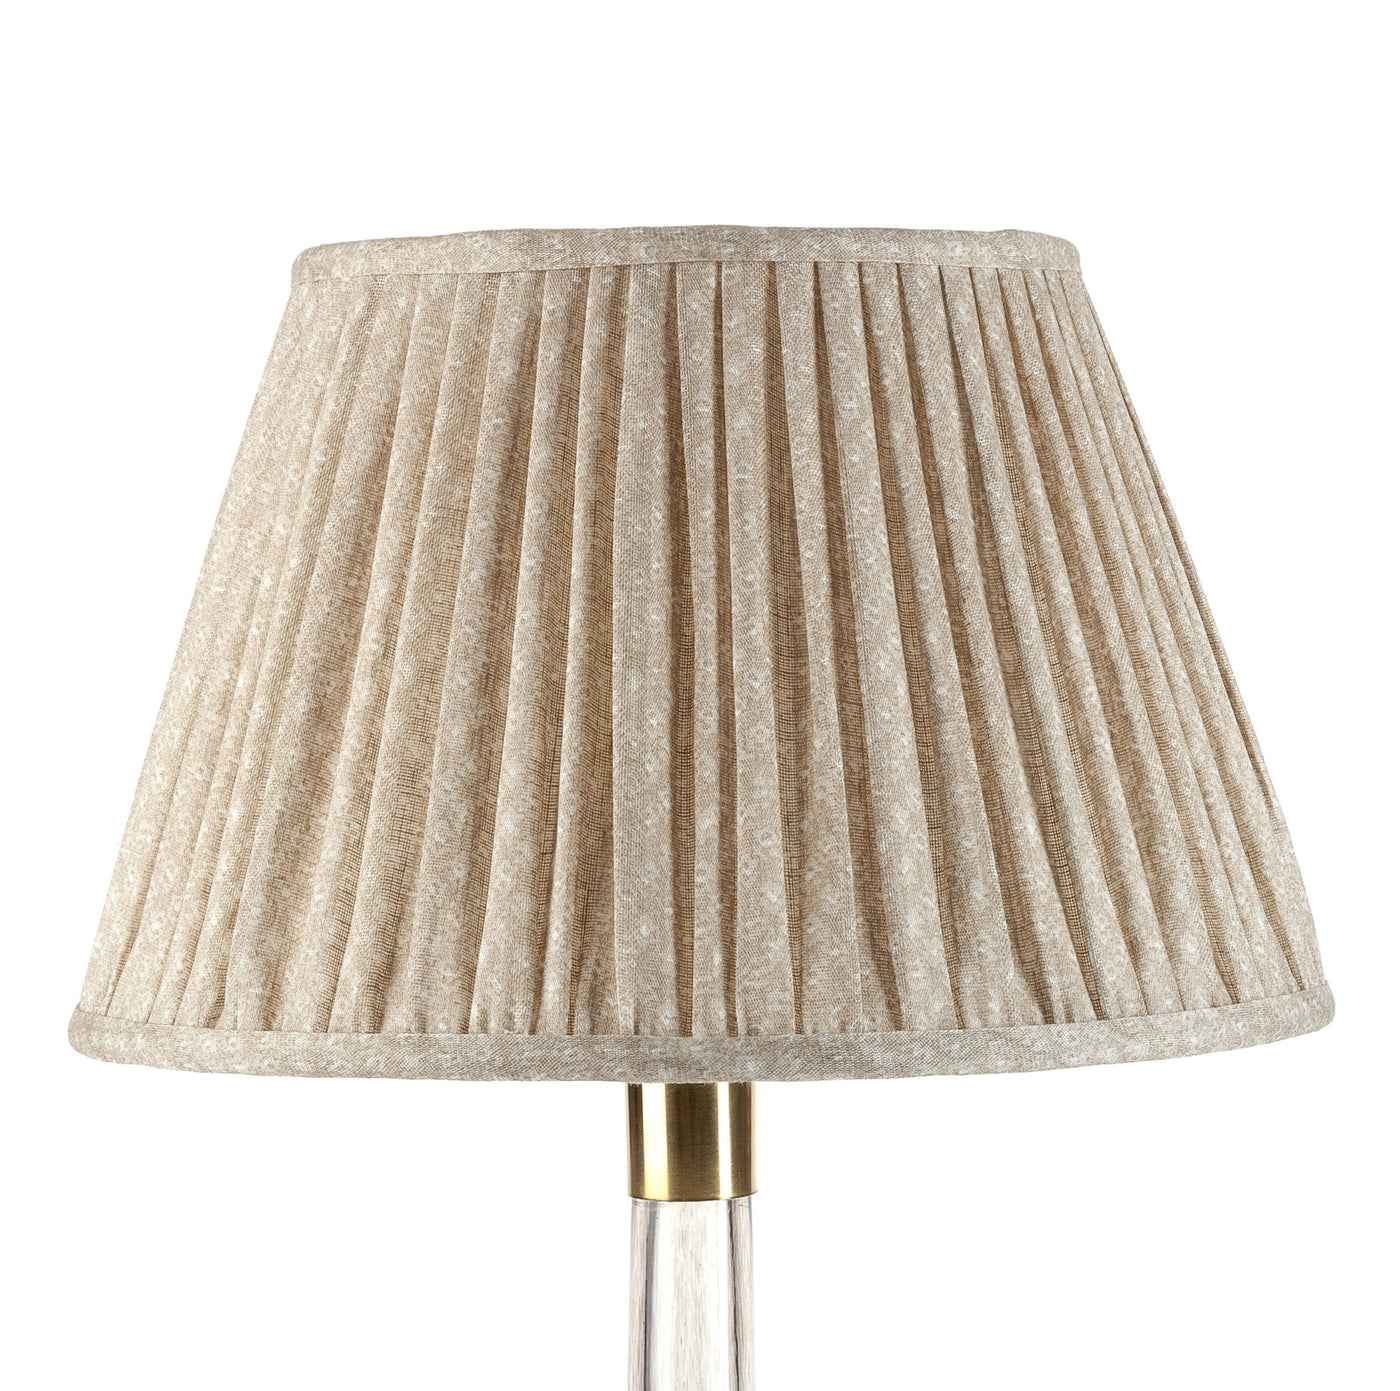 18" Fermoie Lampshade - Figured Linen in Ecru  | Newport Lamp And Shade | Located in Newport, RI